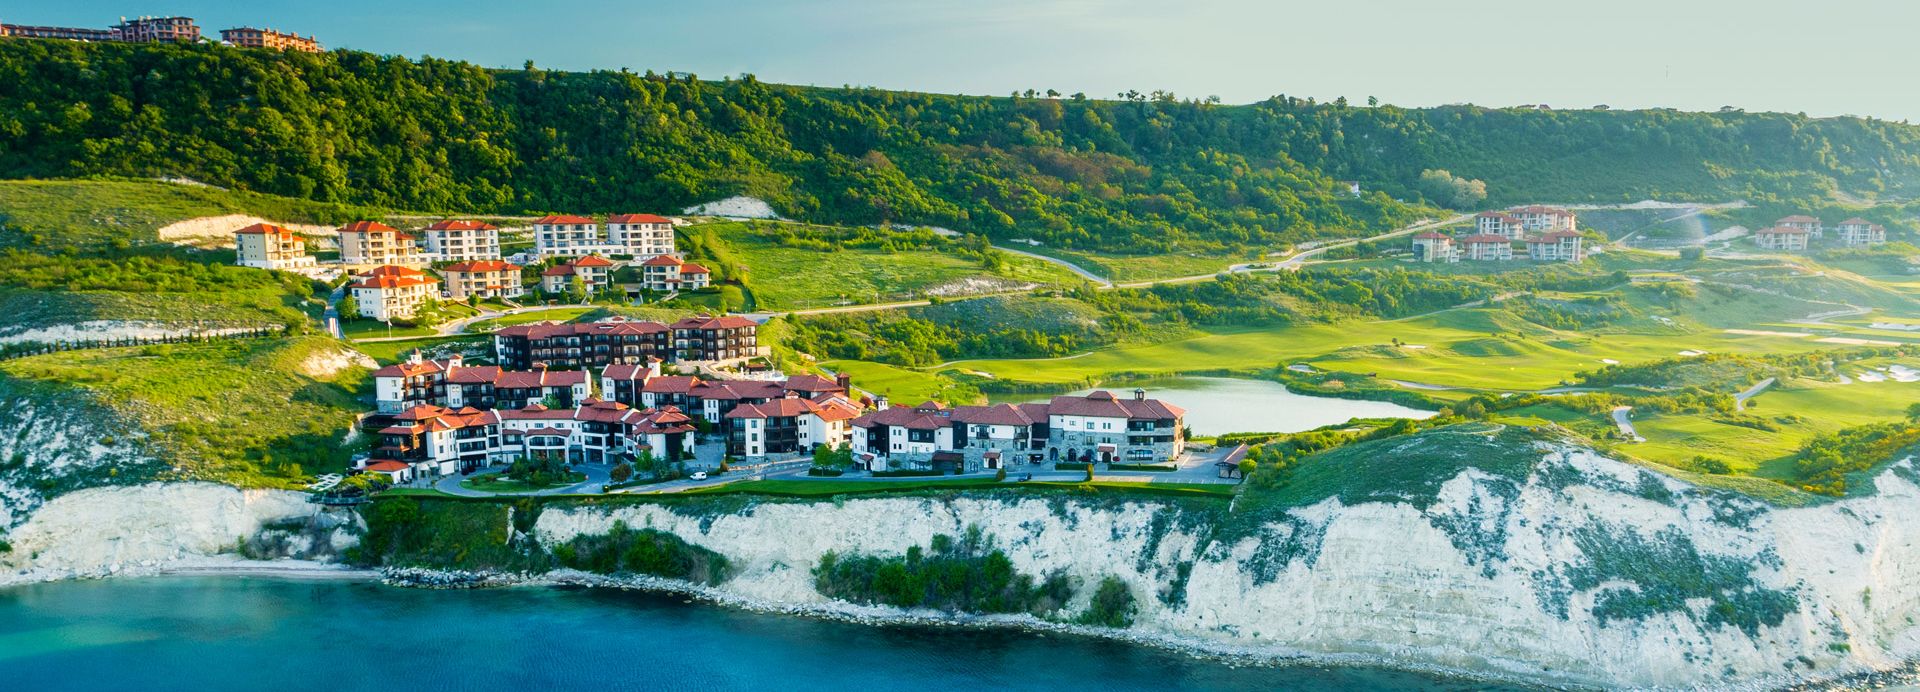 xx thracian cliffs golf  & spa resort - golf  ****